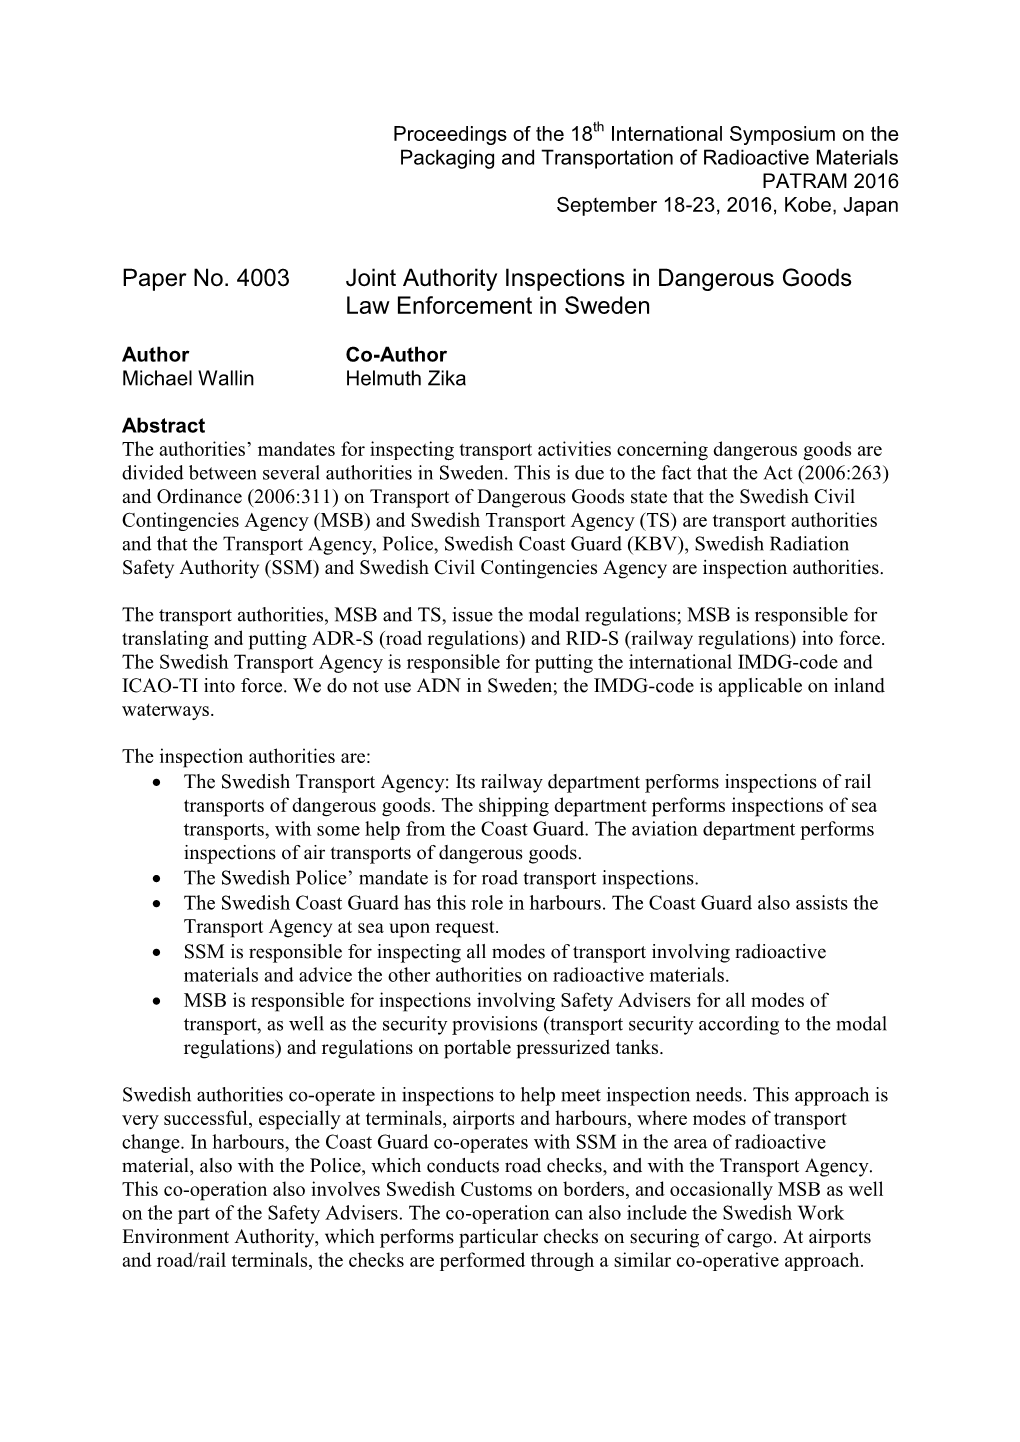 Paper No. 4003 Joint Authority Inspections in Dangerous Goods Law Enforcement in Sweden